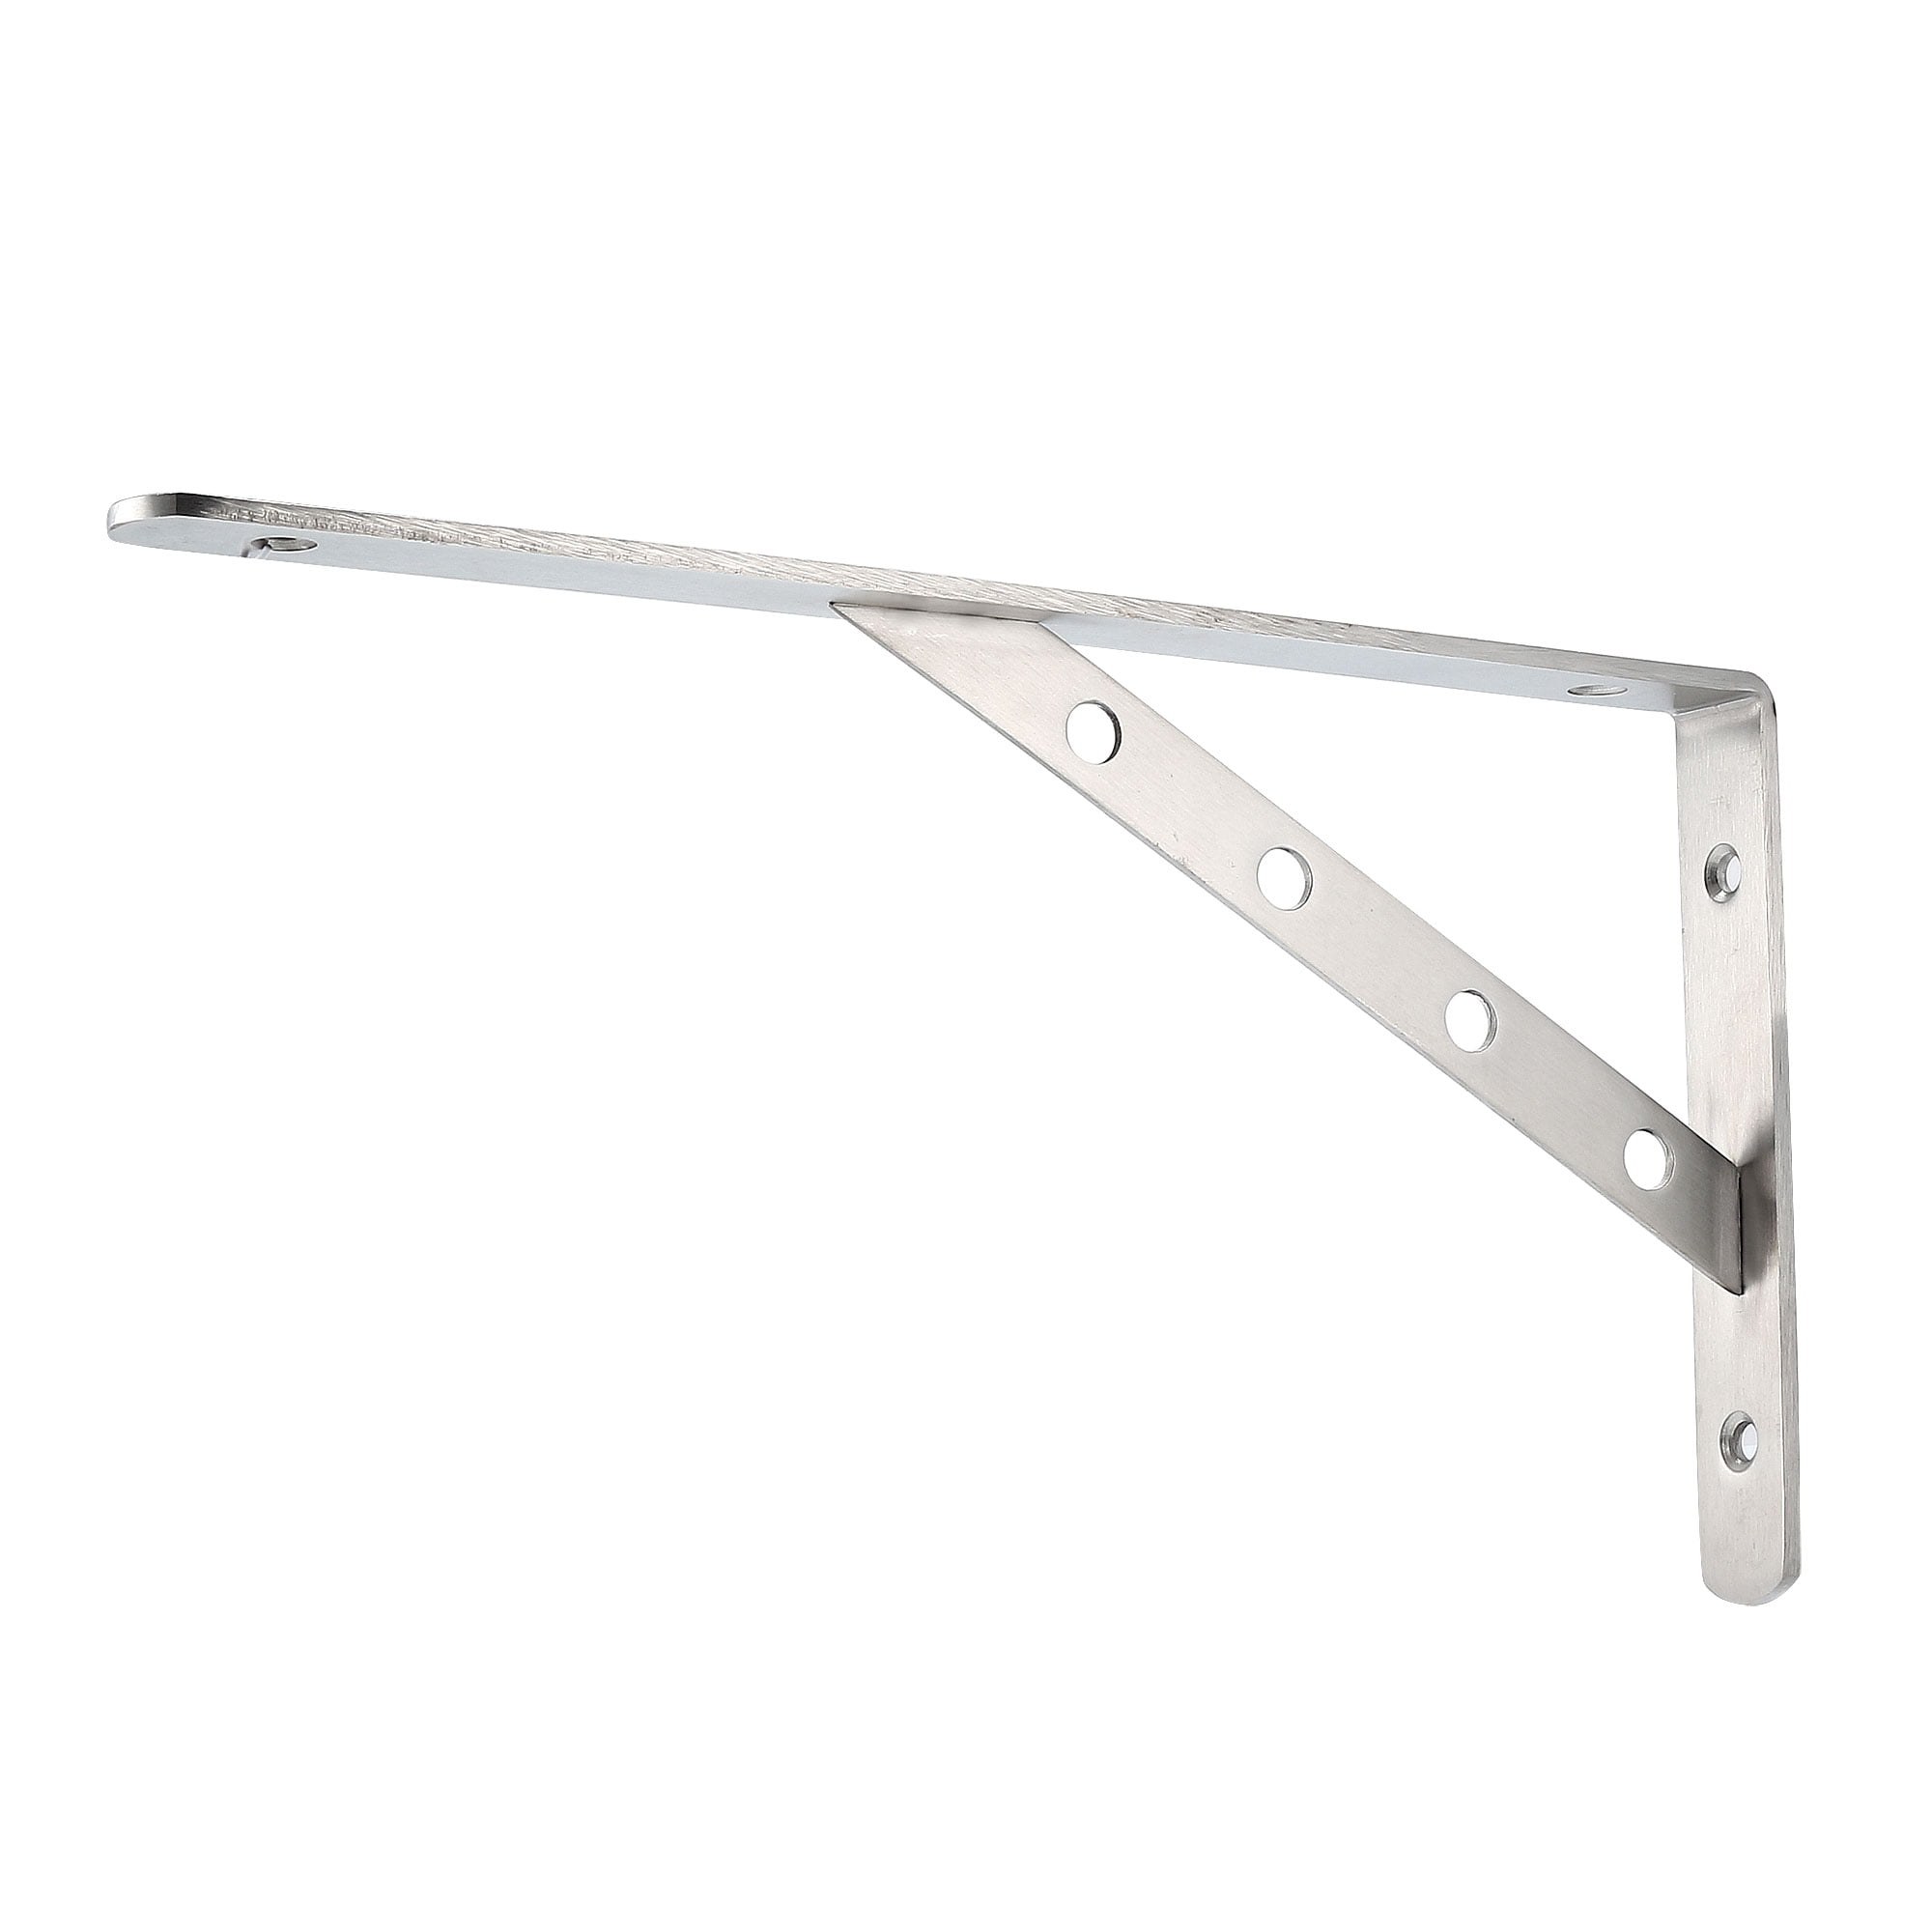 2Pcs/Set Heavy Duty Stainless Steel 6" 8" Angle Shelf Bracket Countertop Support 